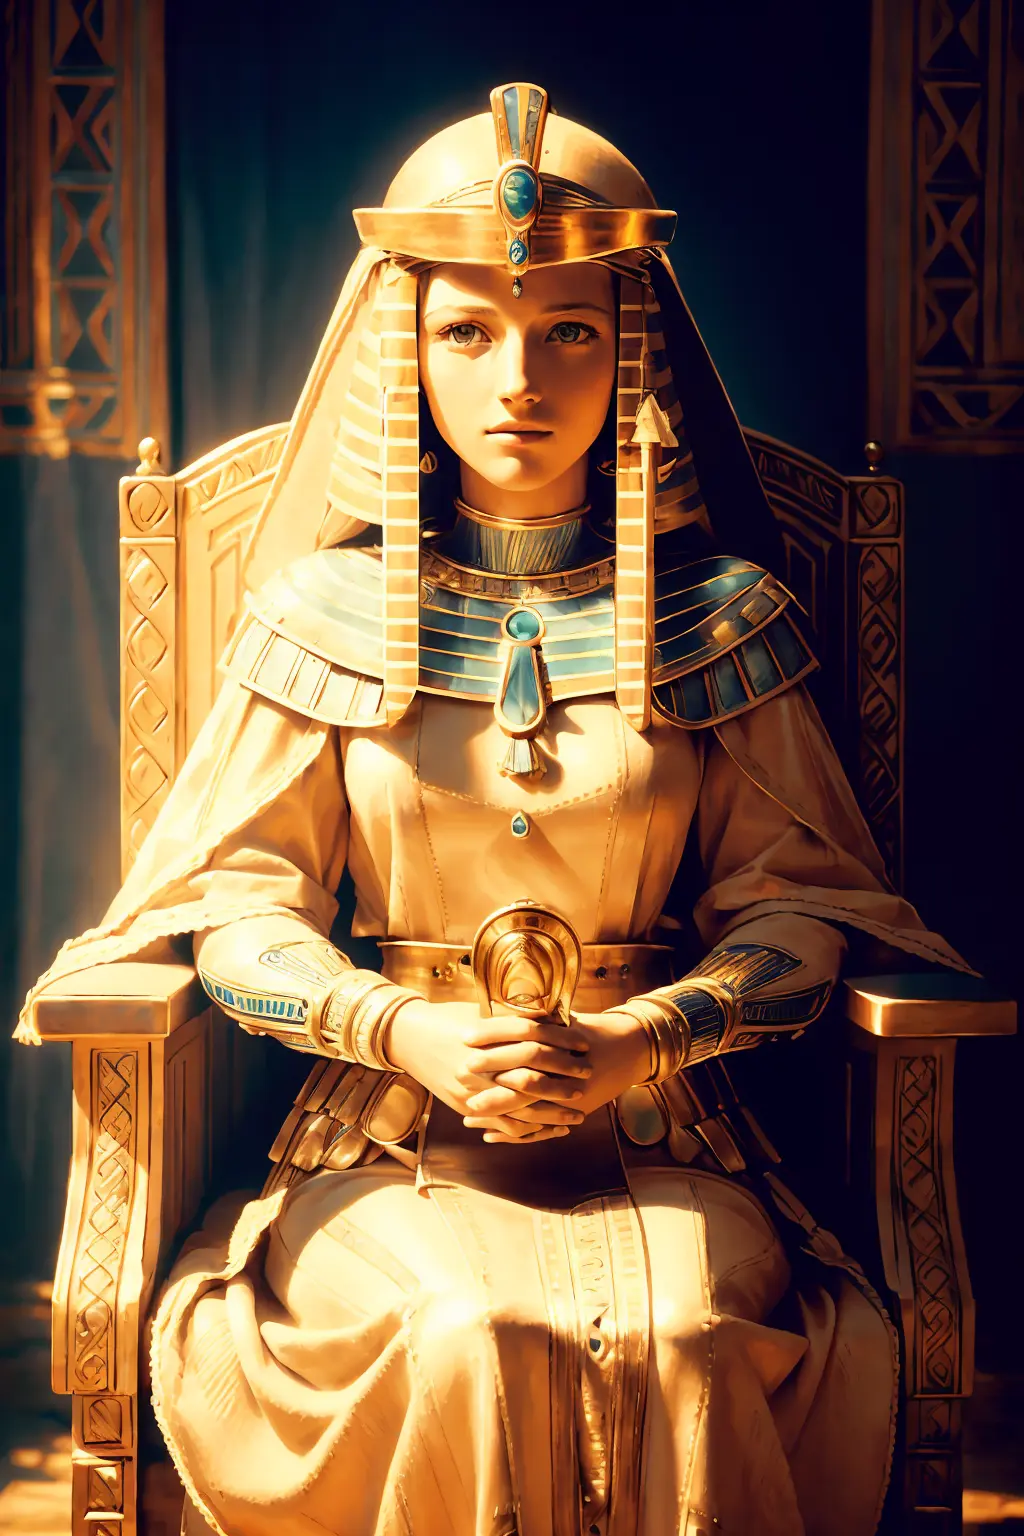 AshleyCipher OldEgyptAI 1 امرأة, ملكة مصر, يجلس على العرش,
(35mmstyle:1.1), أمام, تحفة, فيلم السبعينيات, , الإضاءة السينمائية, واقعية, تفاصيل عالية التردد, فيلم 35 ملم, (حبوب الفيلم), ضجيج الفيلم, 